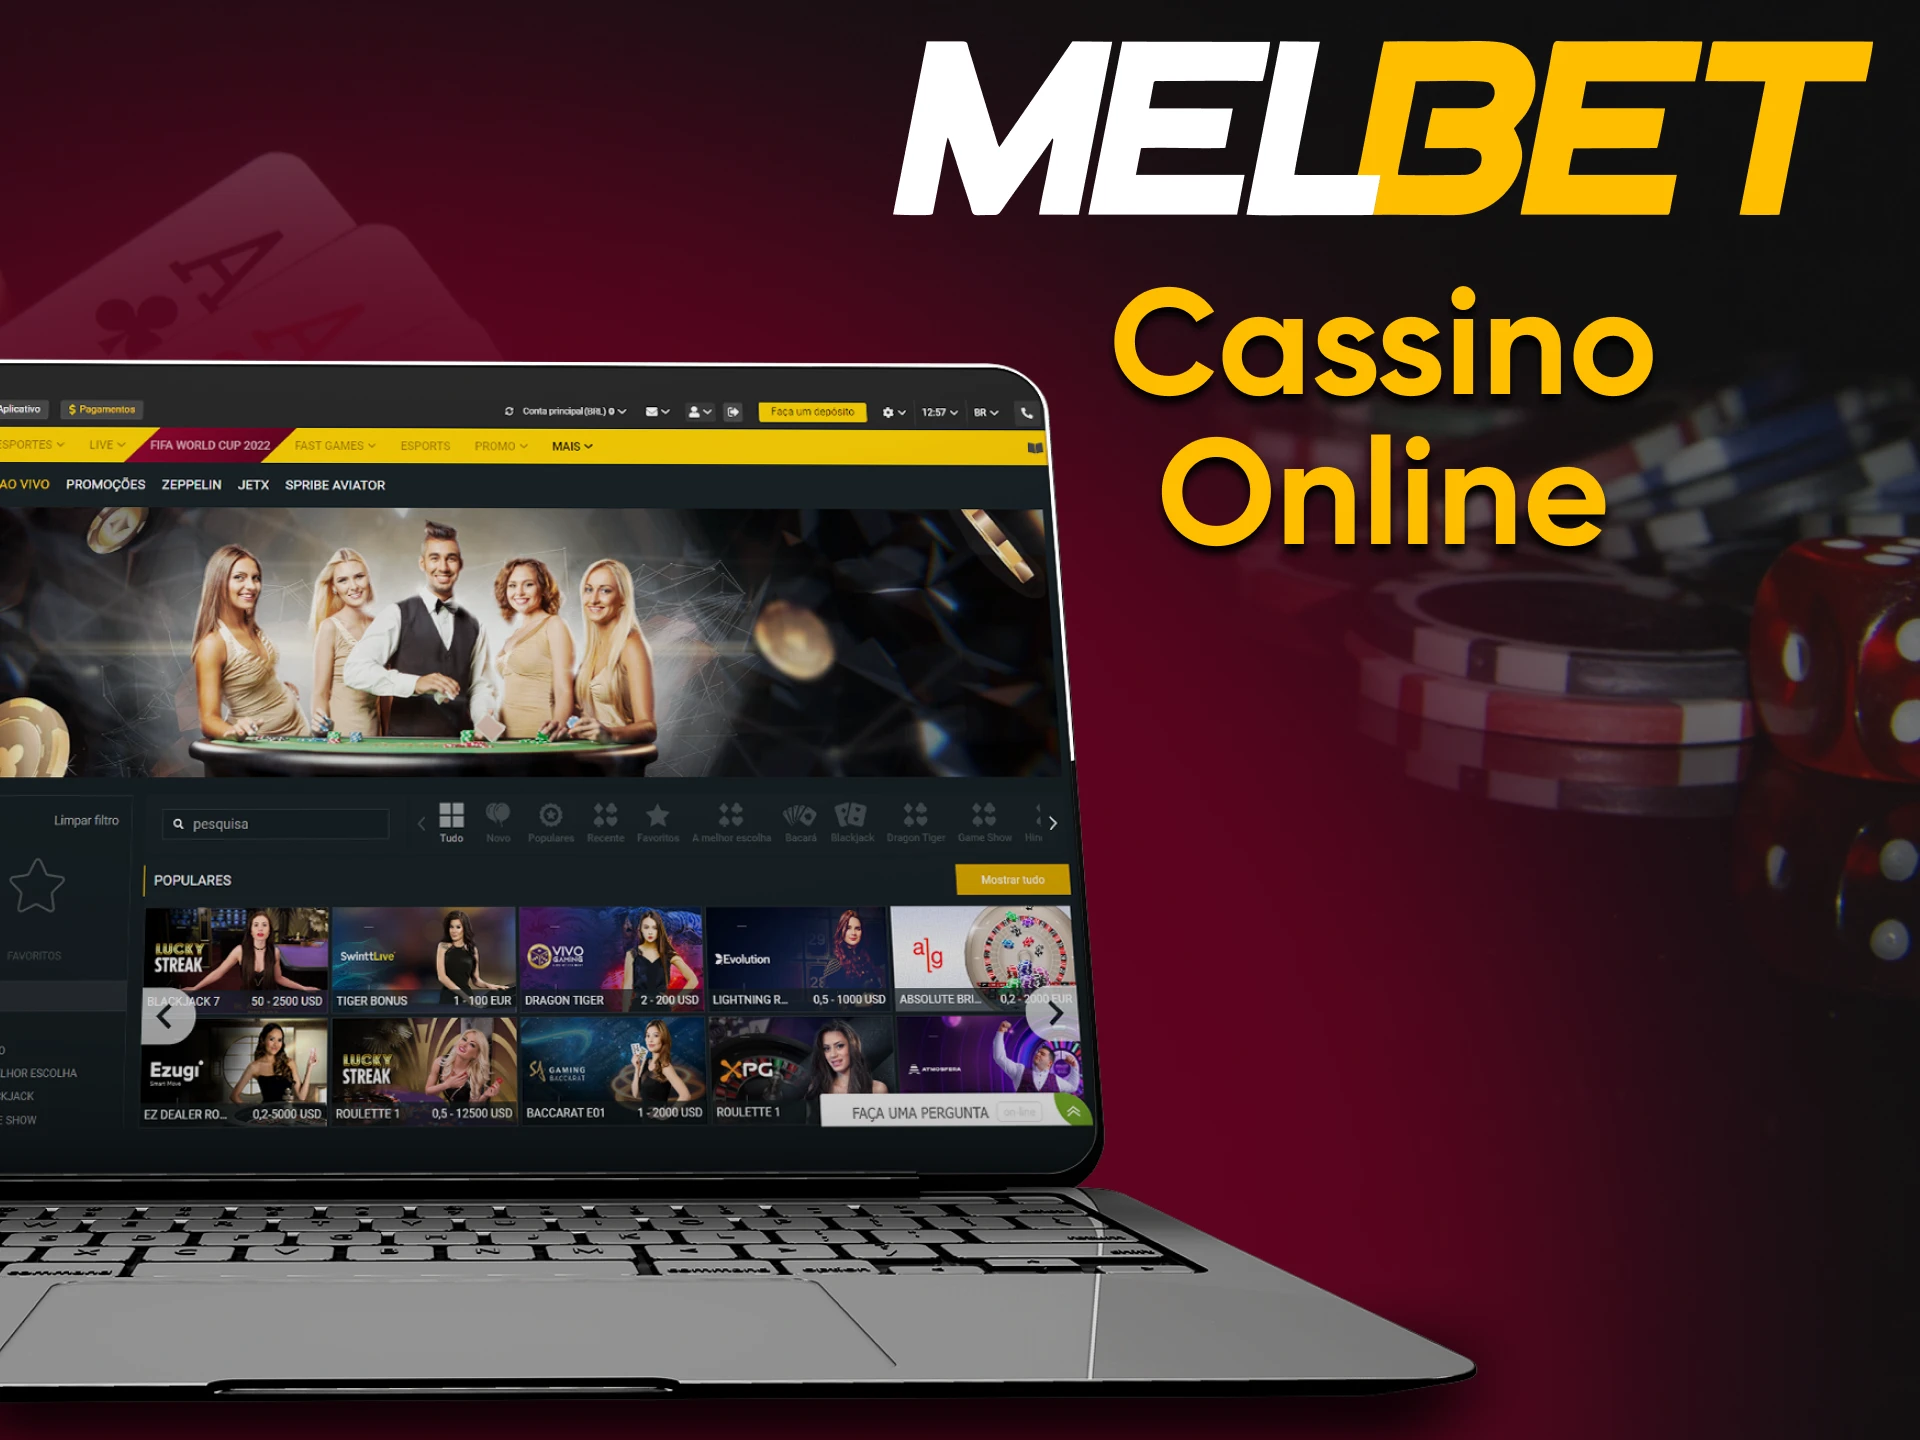 The Melbet website has casino games.